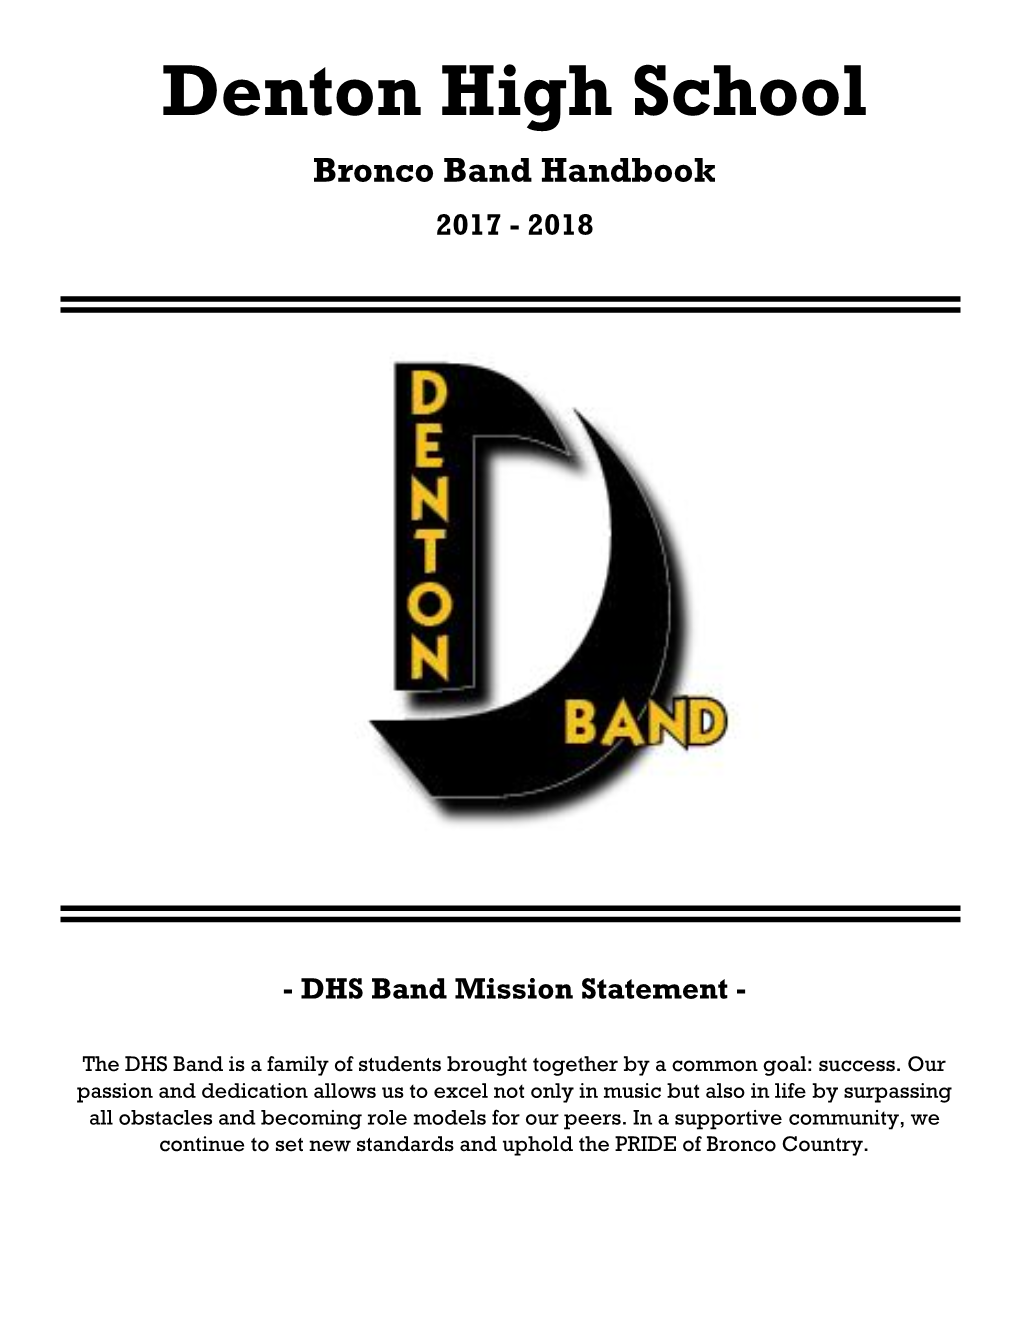 Denton High School Bronco Band Handbook